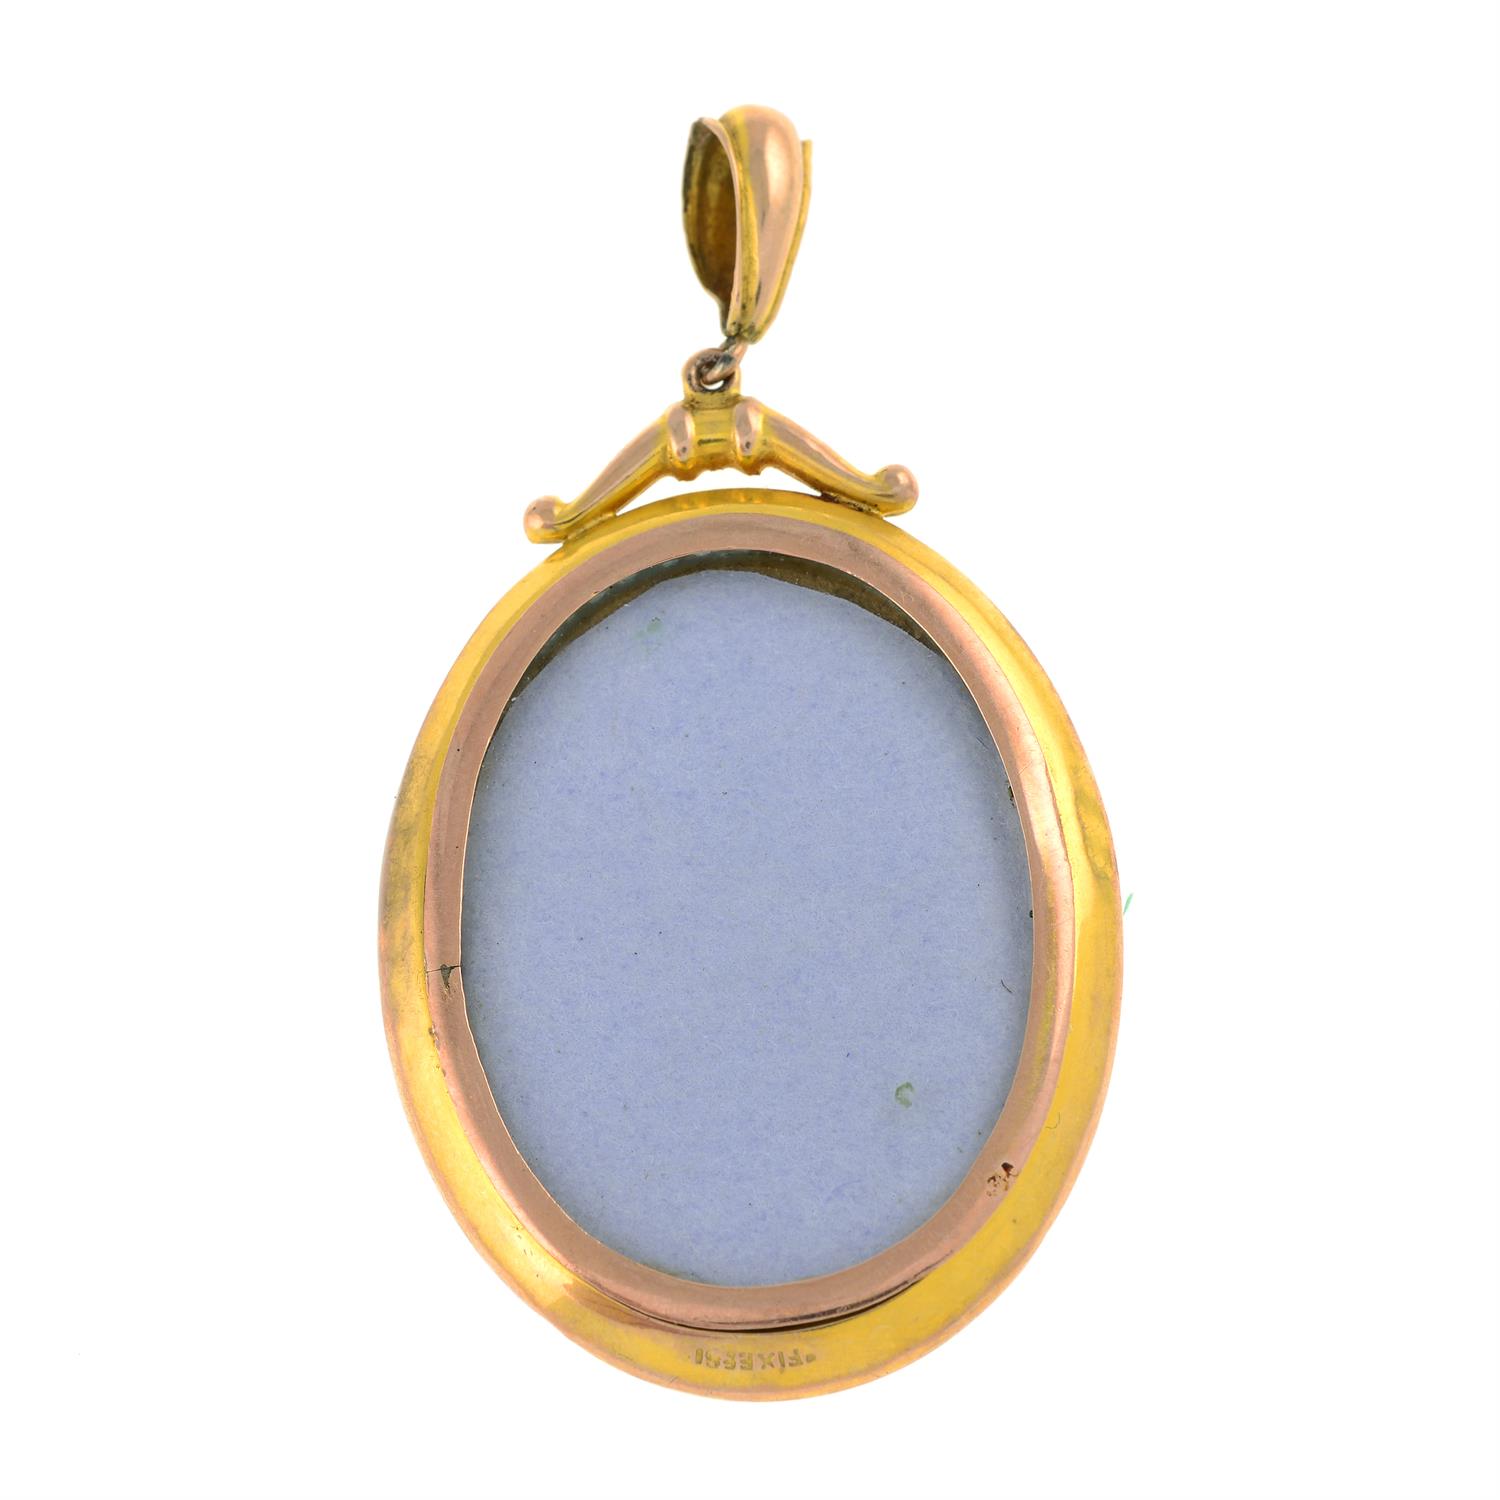 A 19th century 9ct gold locket pendant. - Image 2 of 2